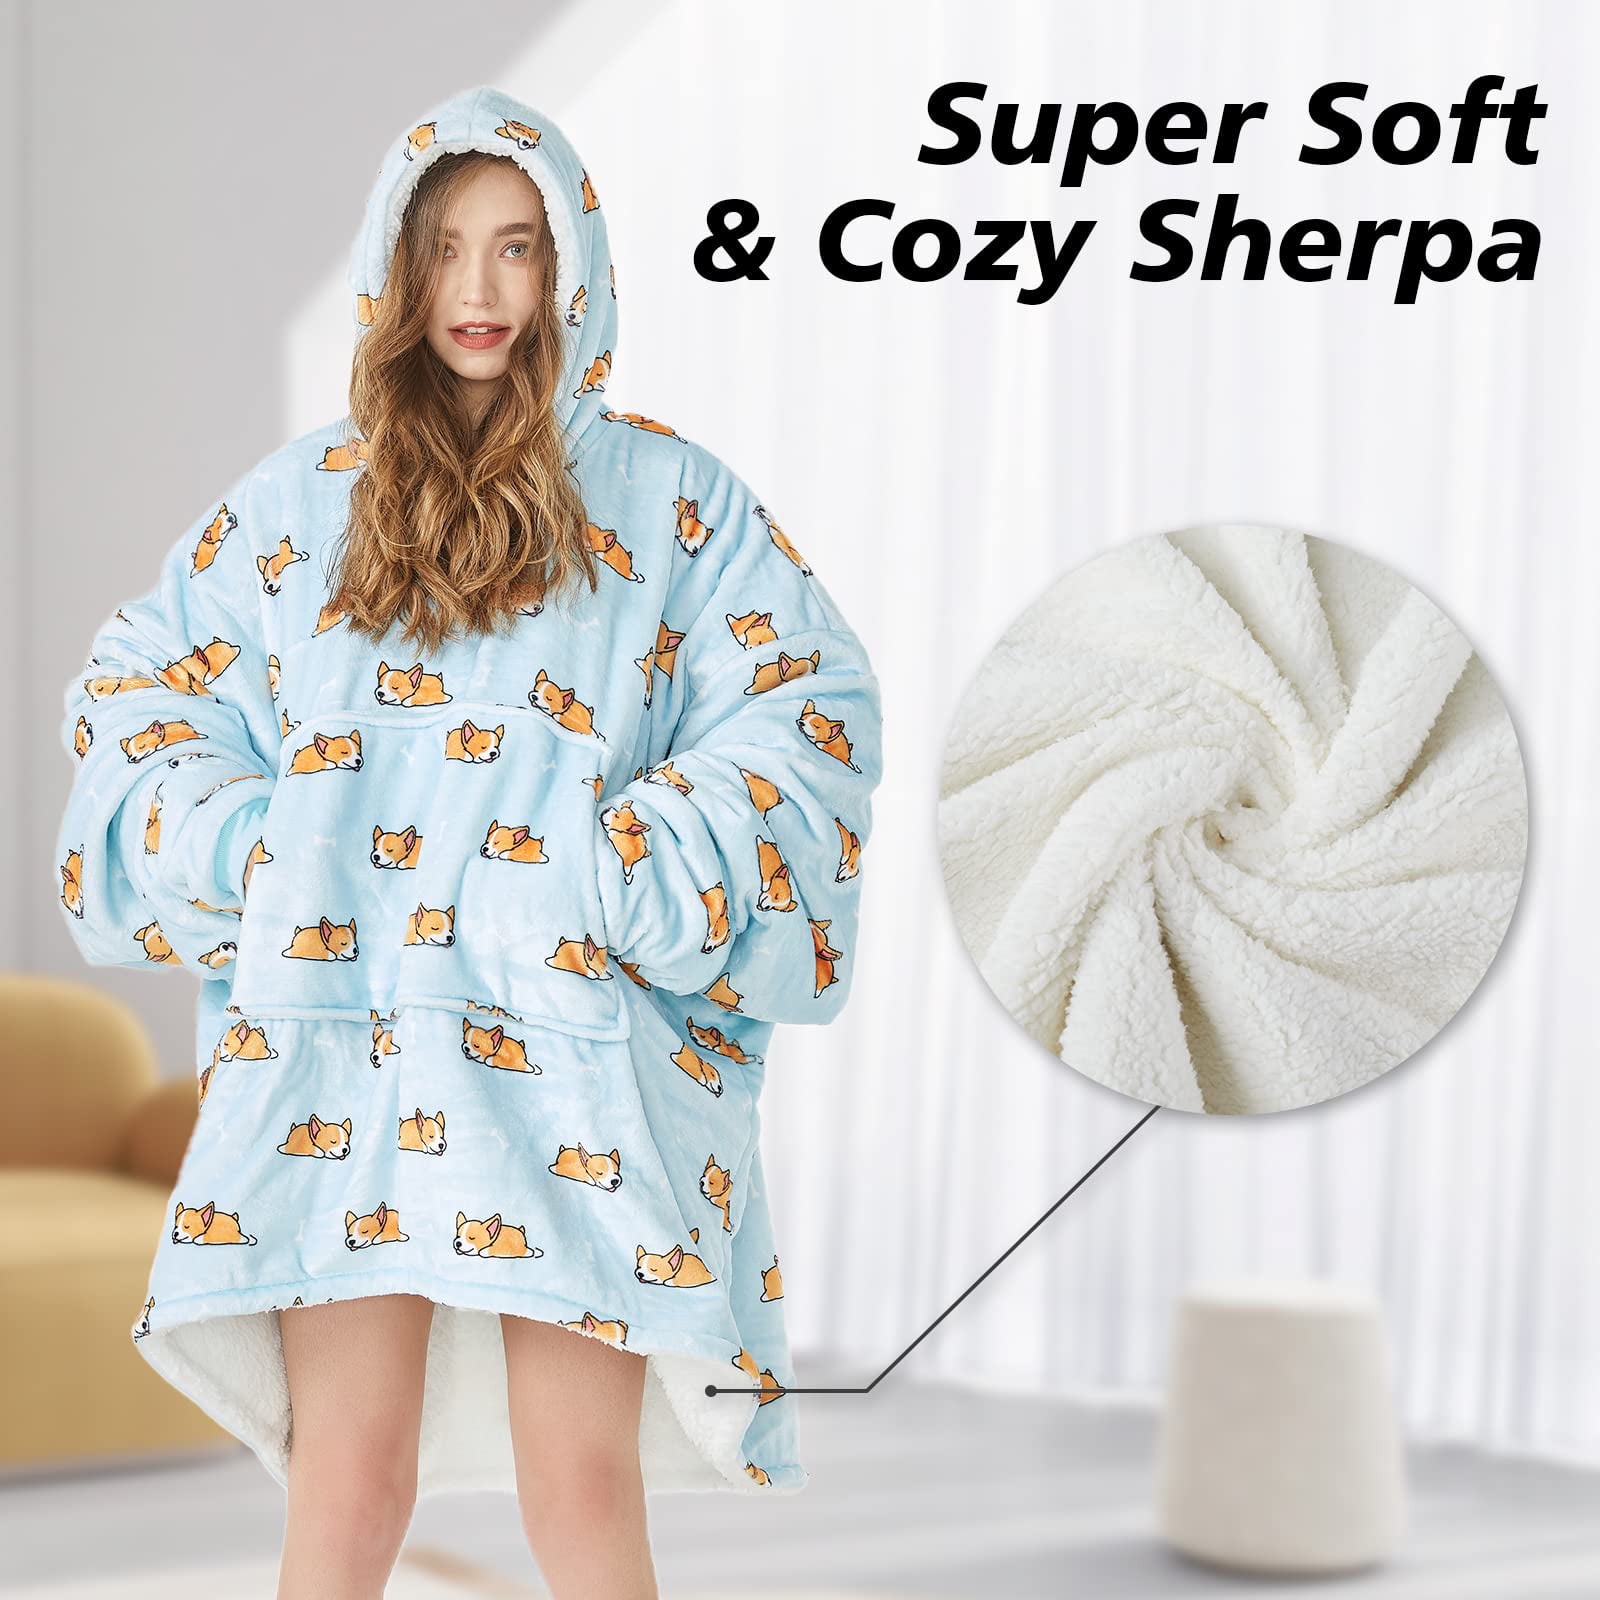 Homemate Wearable Blanket Hoodie, Cute and Funny Patterns Oversized Hoodie Sweat